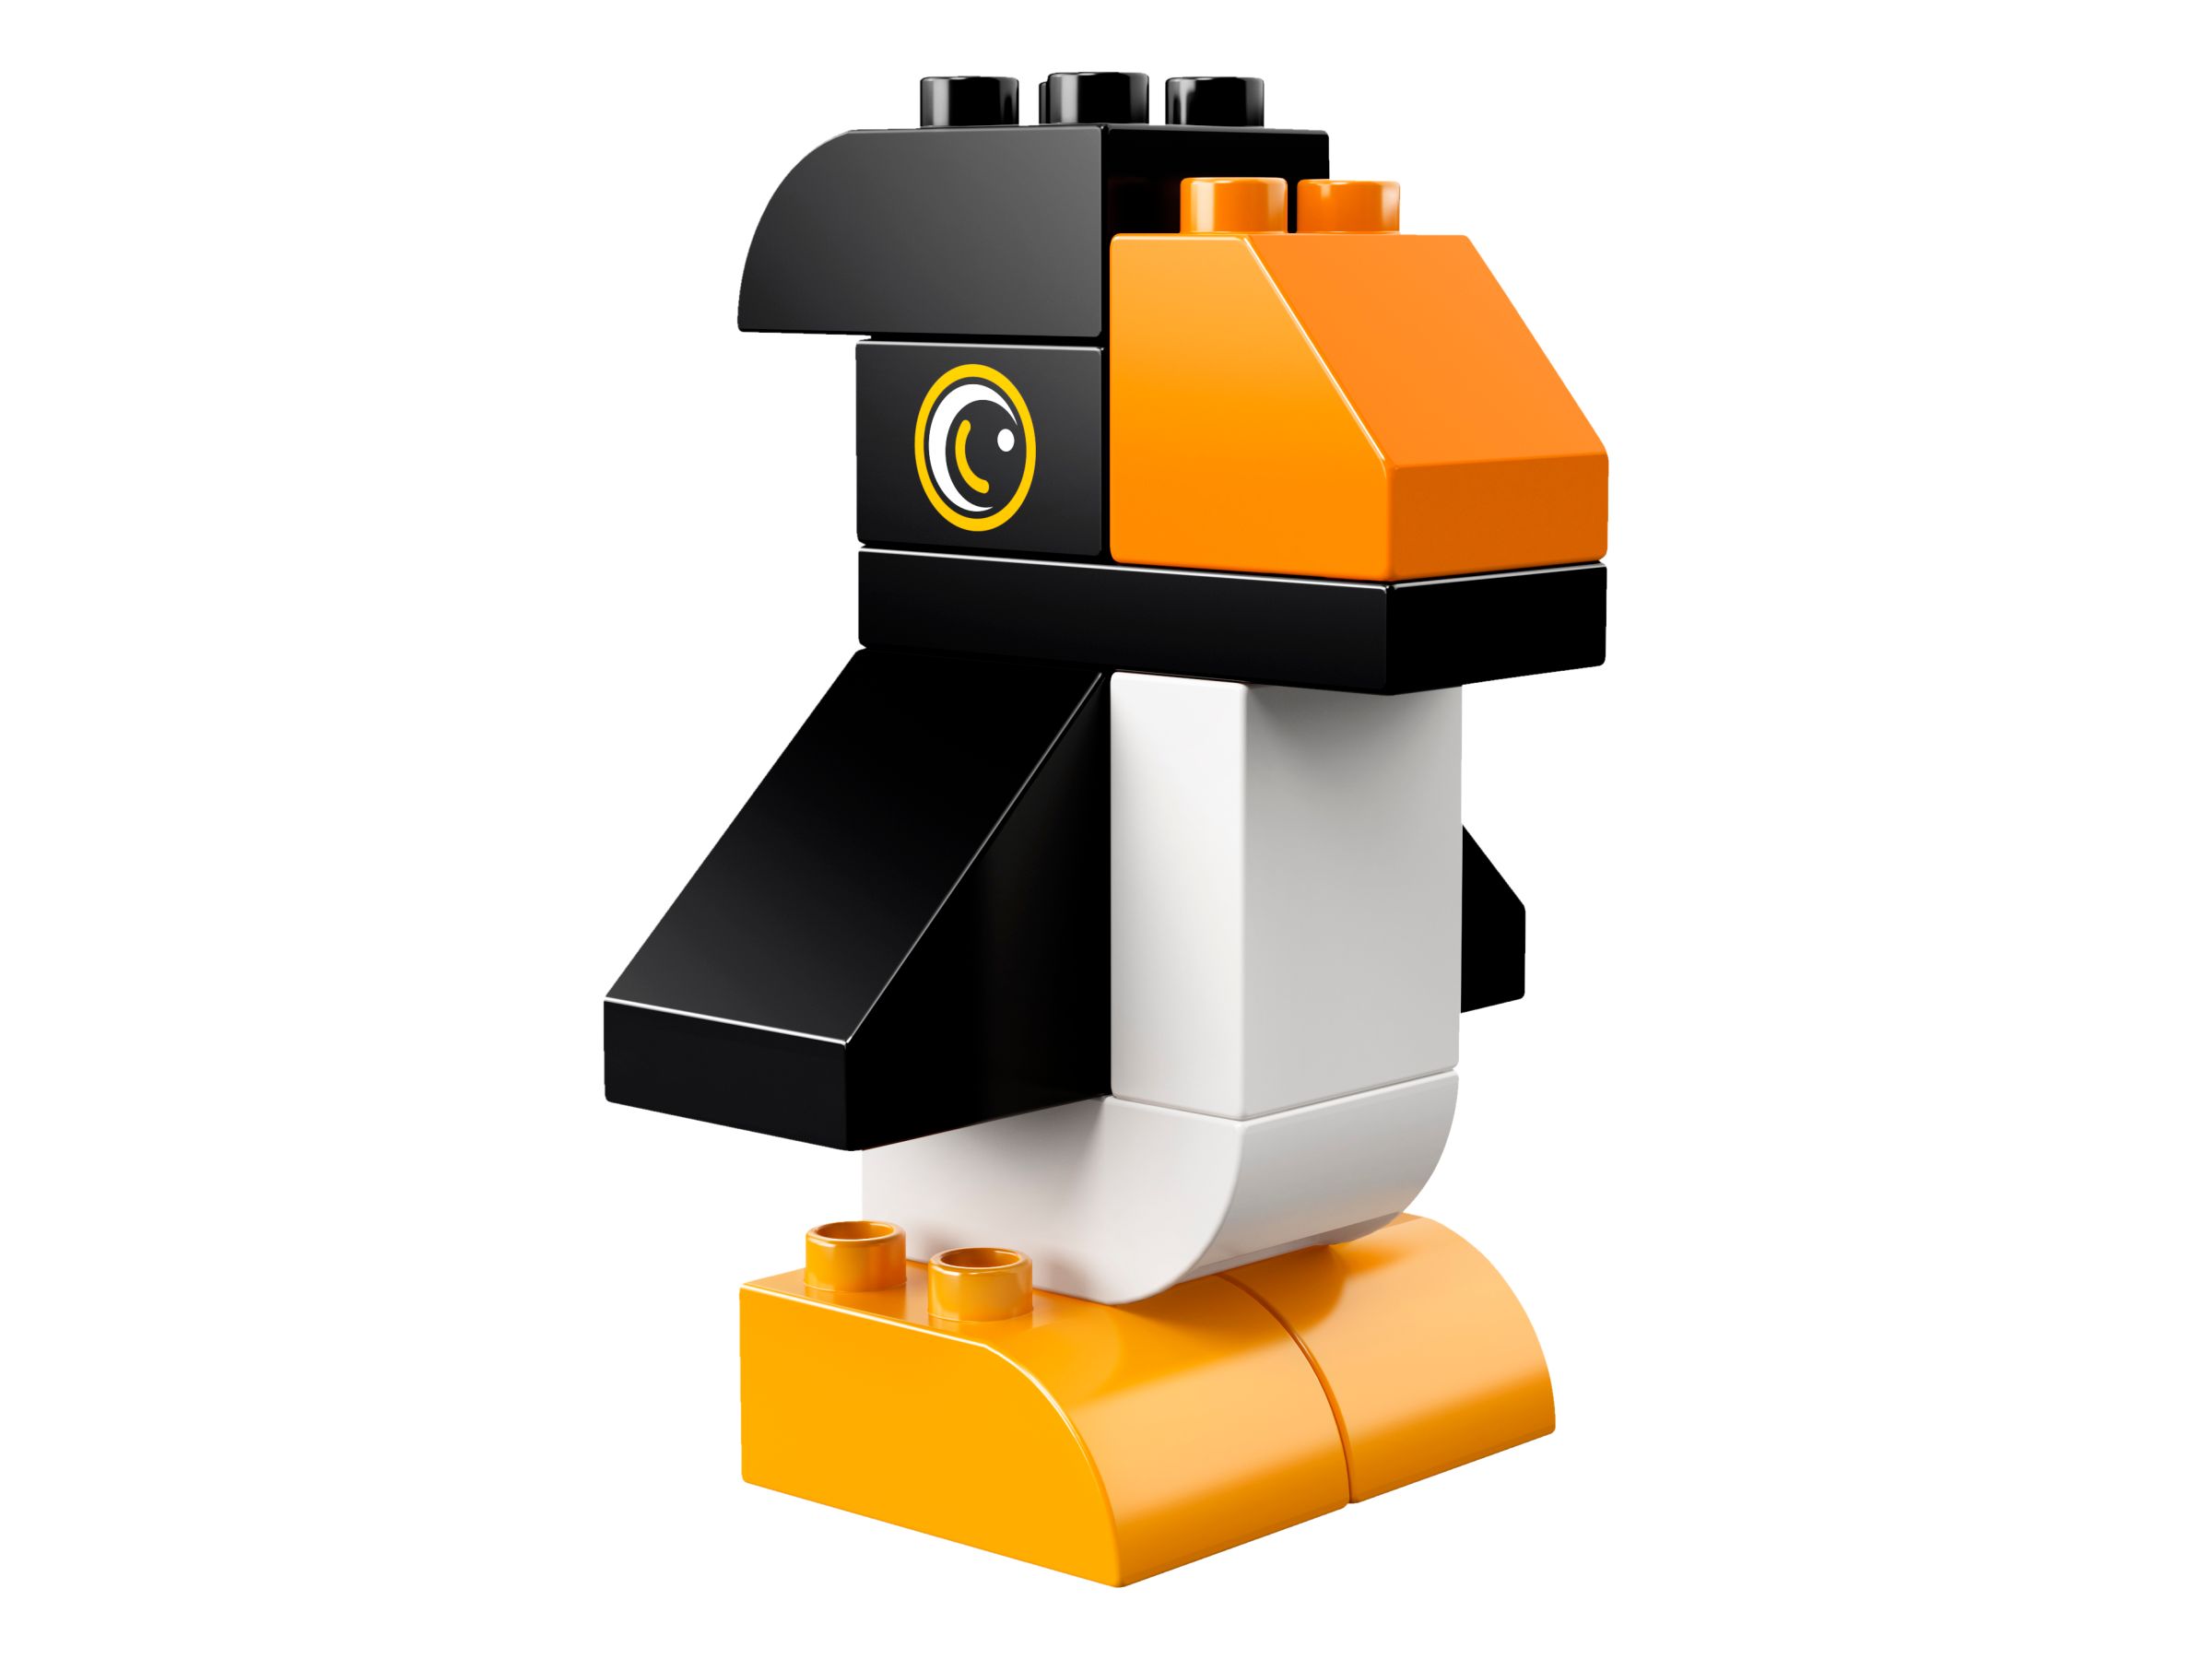 LEGO Duplo 10865 Witzige Modelle LEGO_10865_alt7.jpg